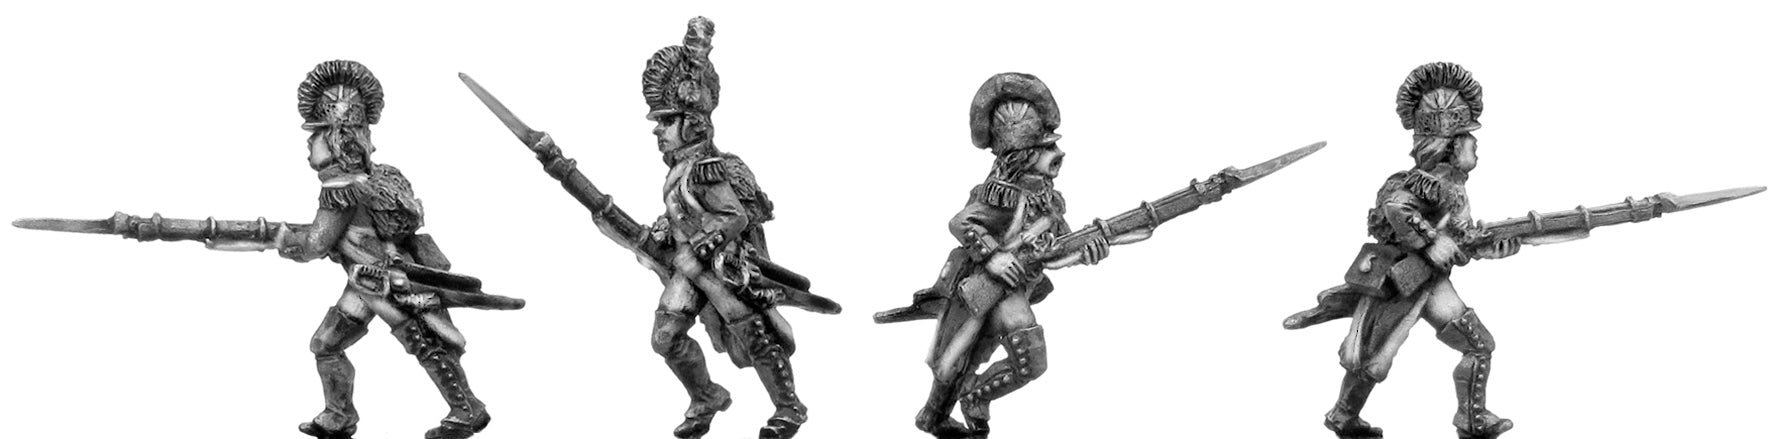 (100WFR016) Grenadier, casque, regulation uniform, advancing